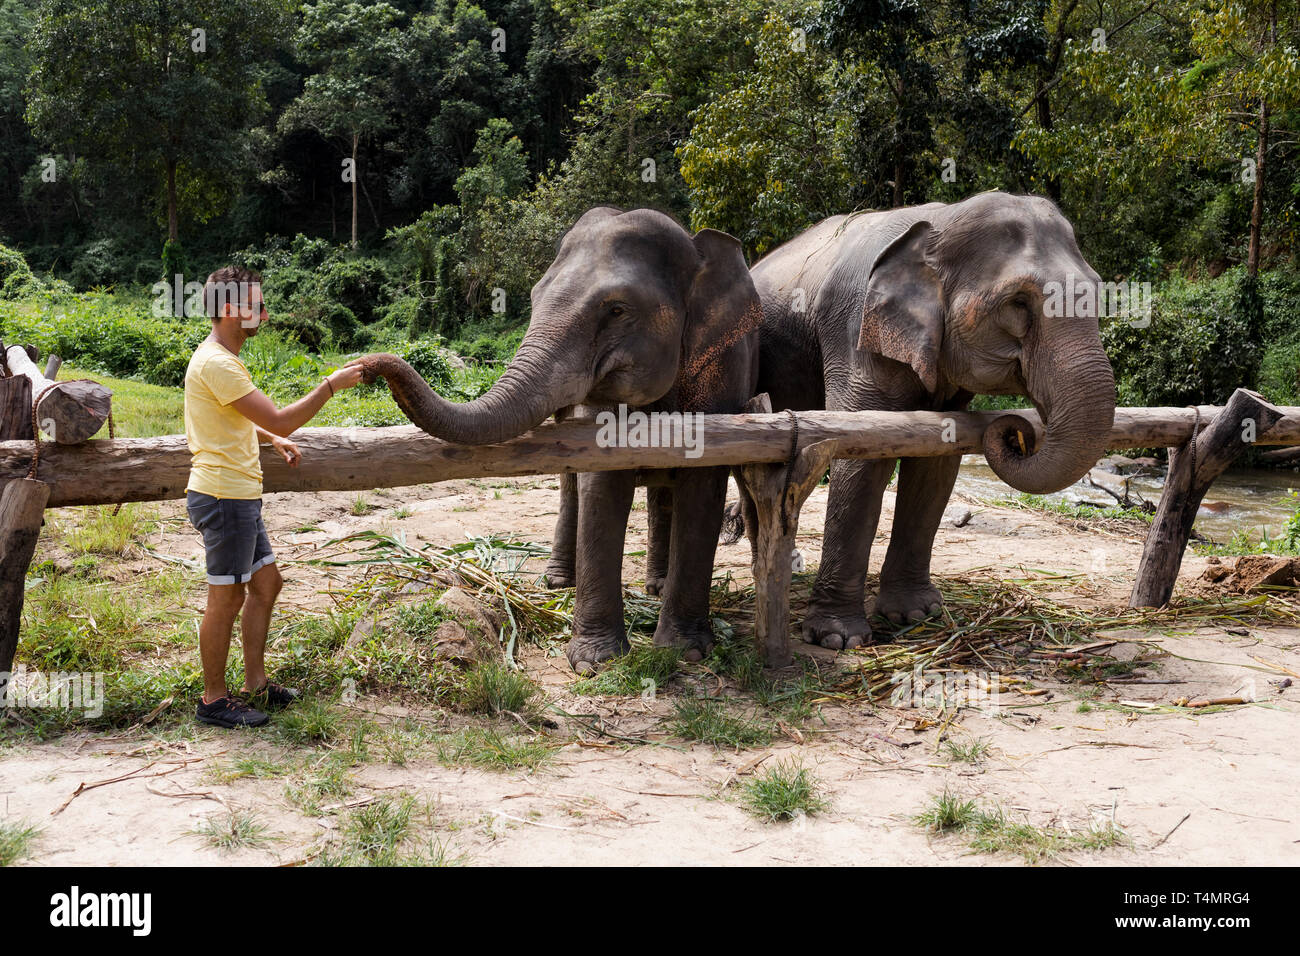 Man feeding Elephants in a Elephant Sanctuary. Chiang Mai, Thailand. Stock Photo